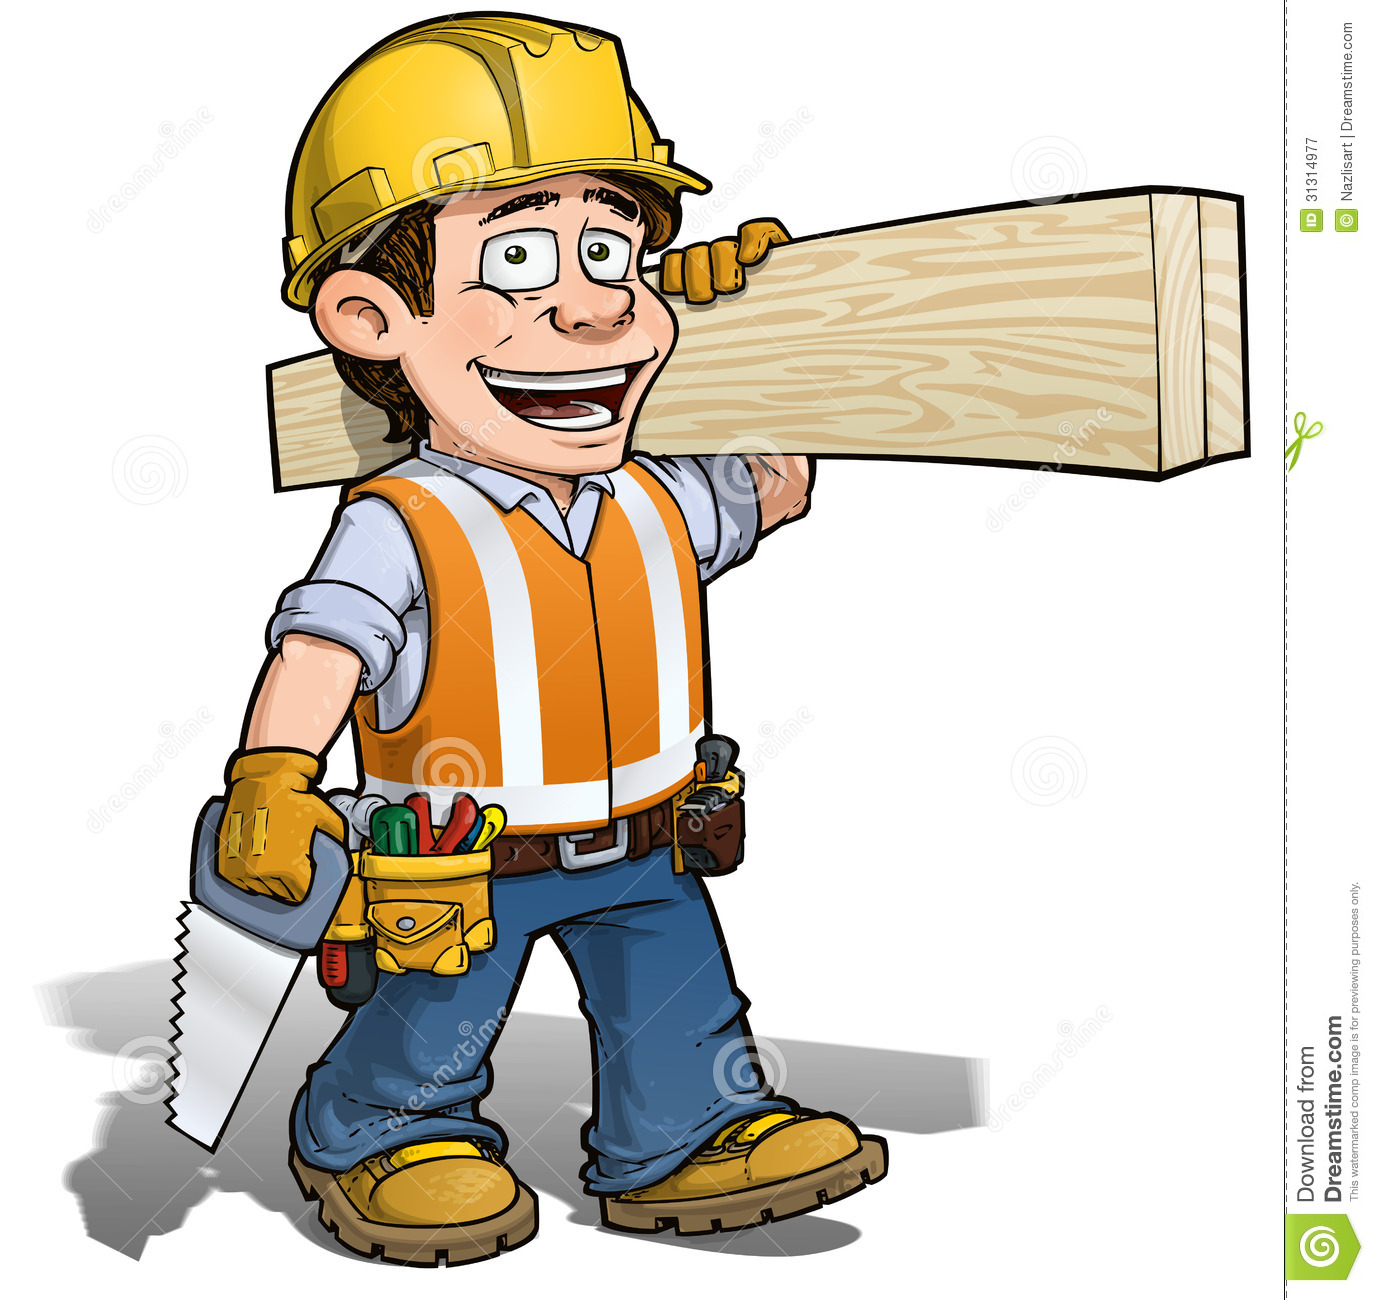 Cartoon Construction Worker Clipart #1 | Cartoon Characters Human | Pinterest | Cartoon, Construction worker and Construction